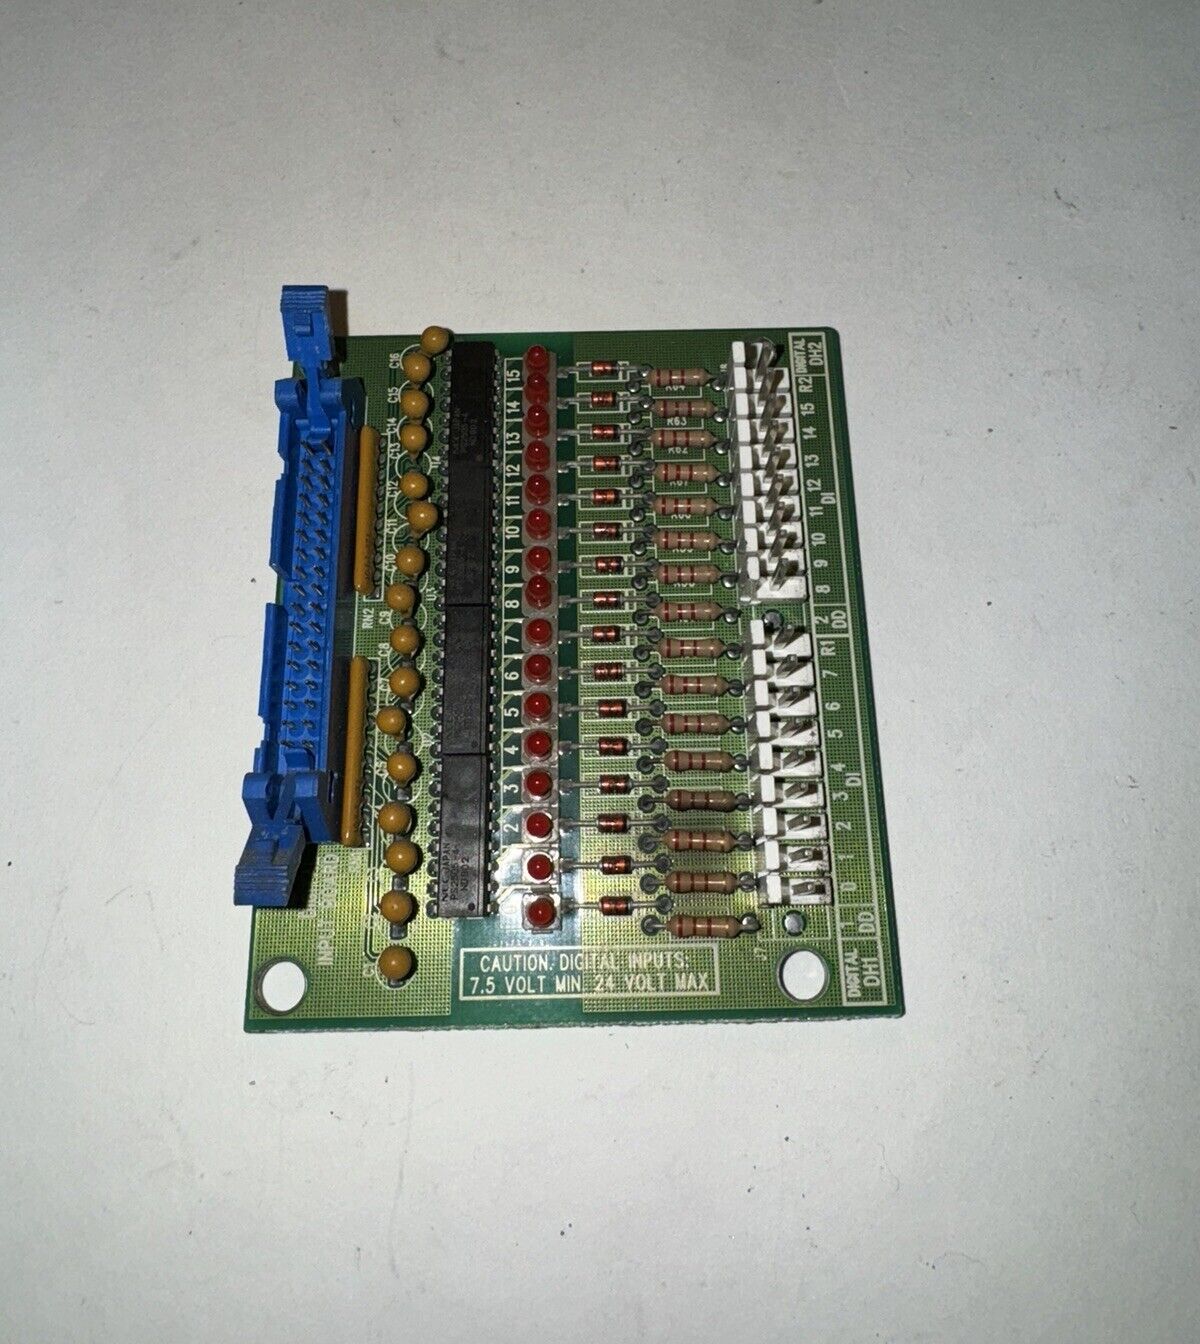 McQuay International 006-000427-01 Rev B Circuit Board P/N 733055-01 Tested